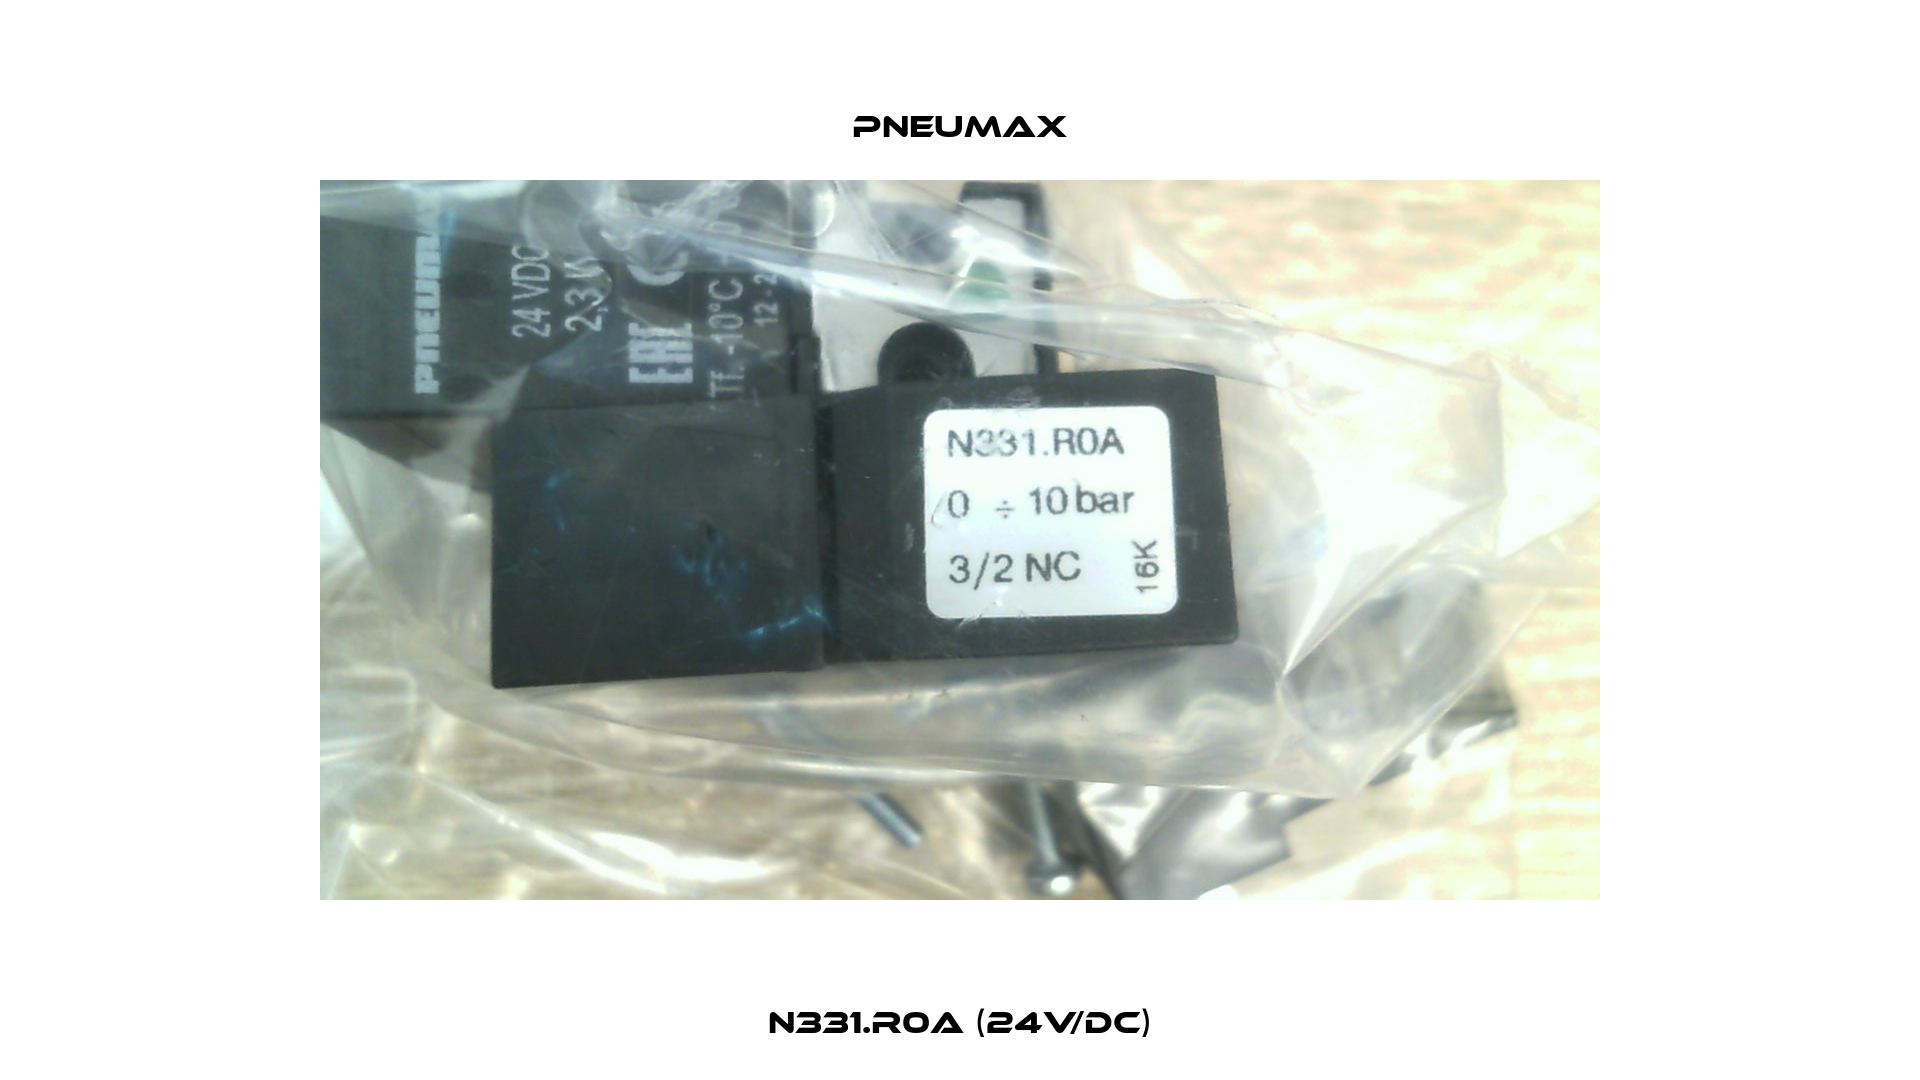 N331.R0A (24V/DC) Pneumax